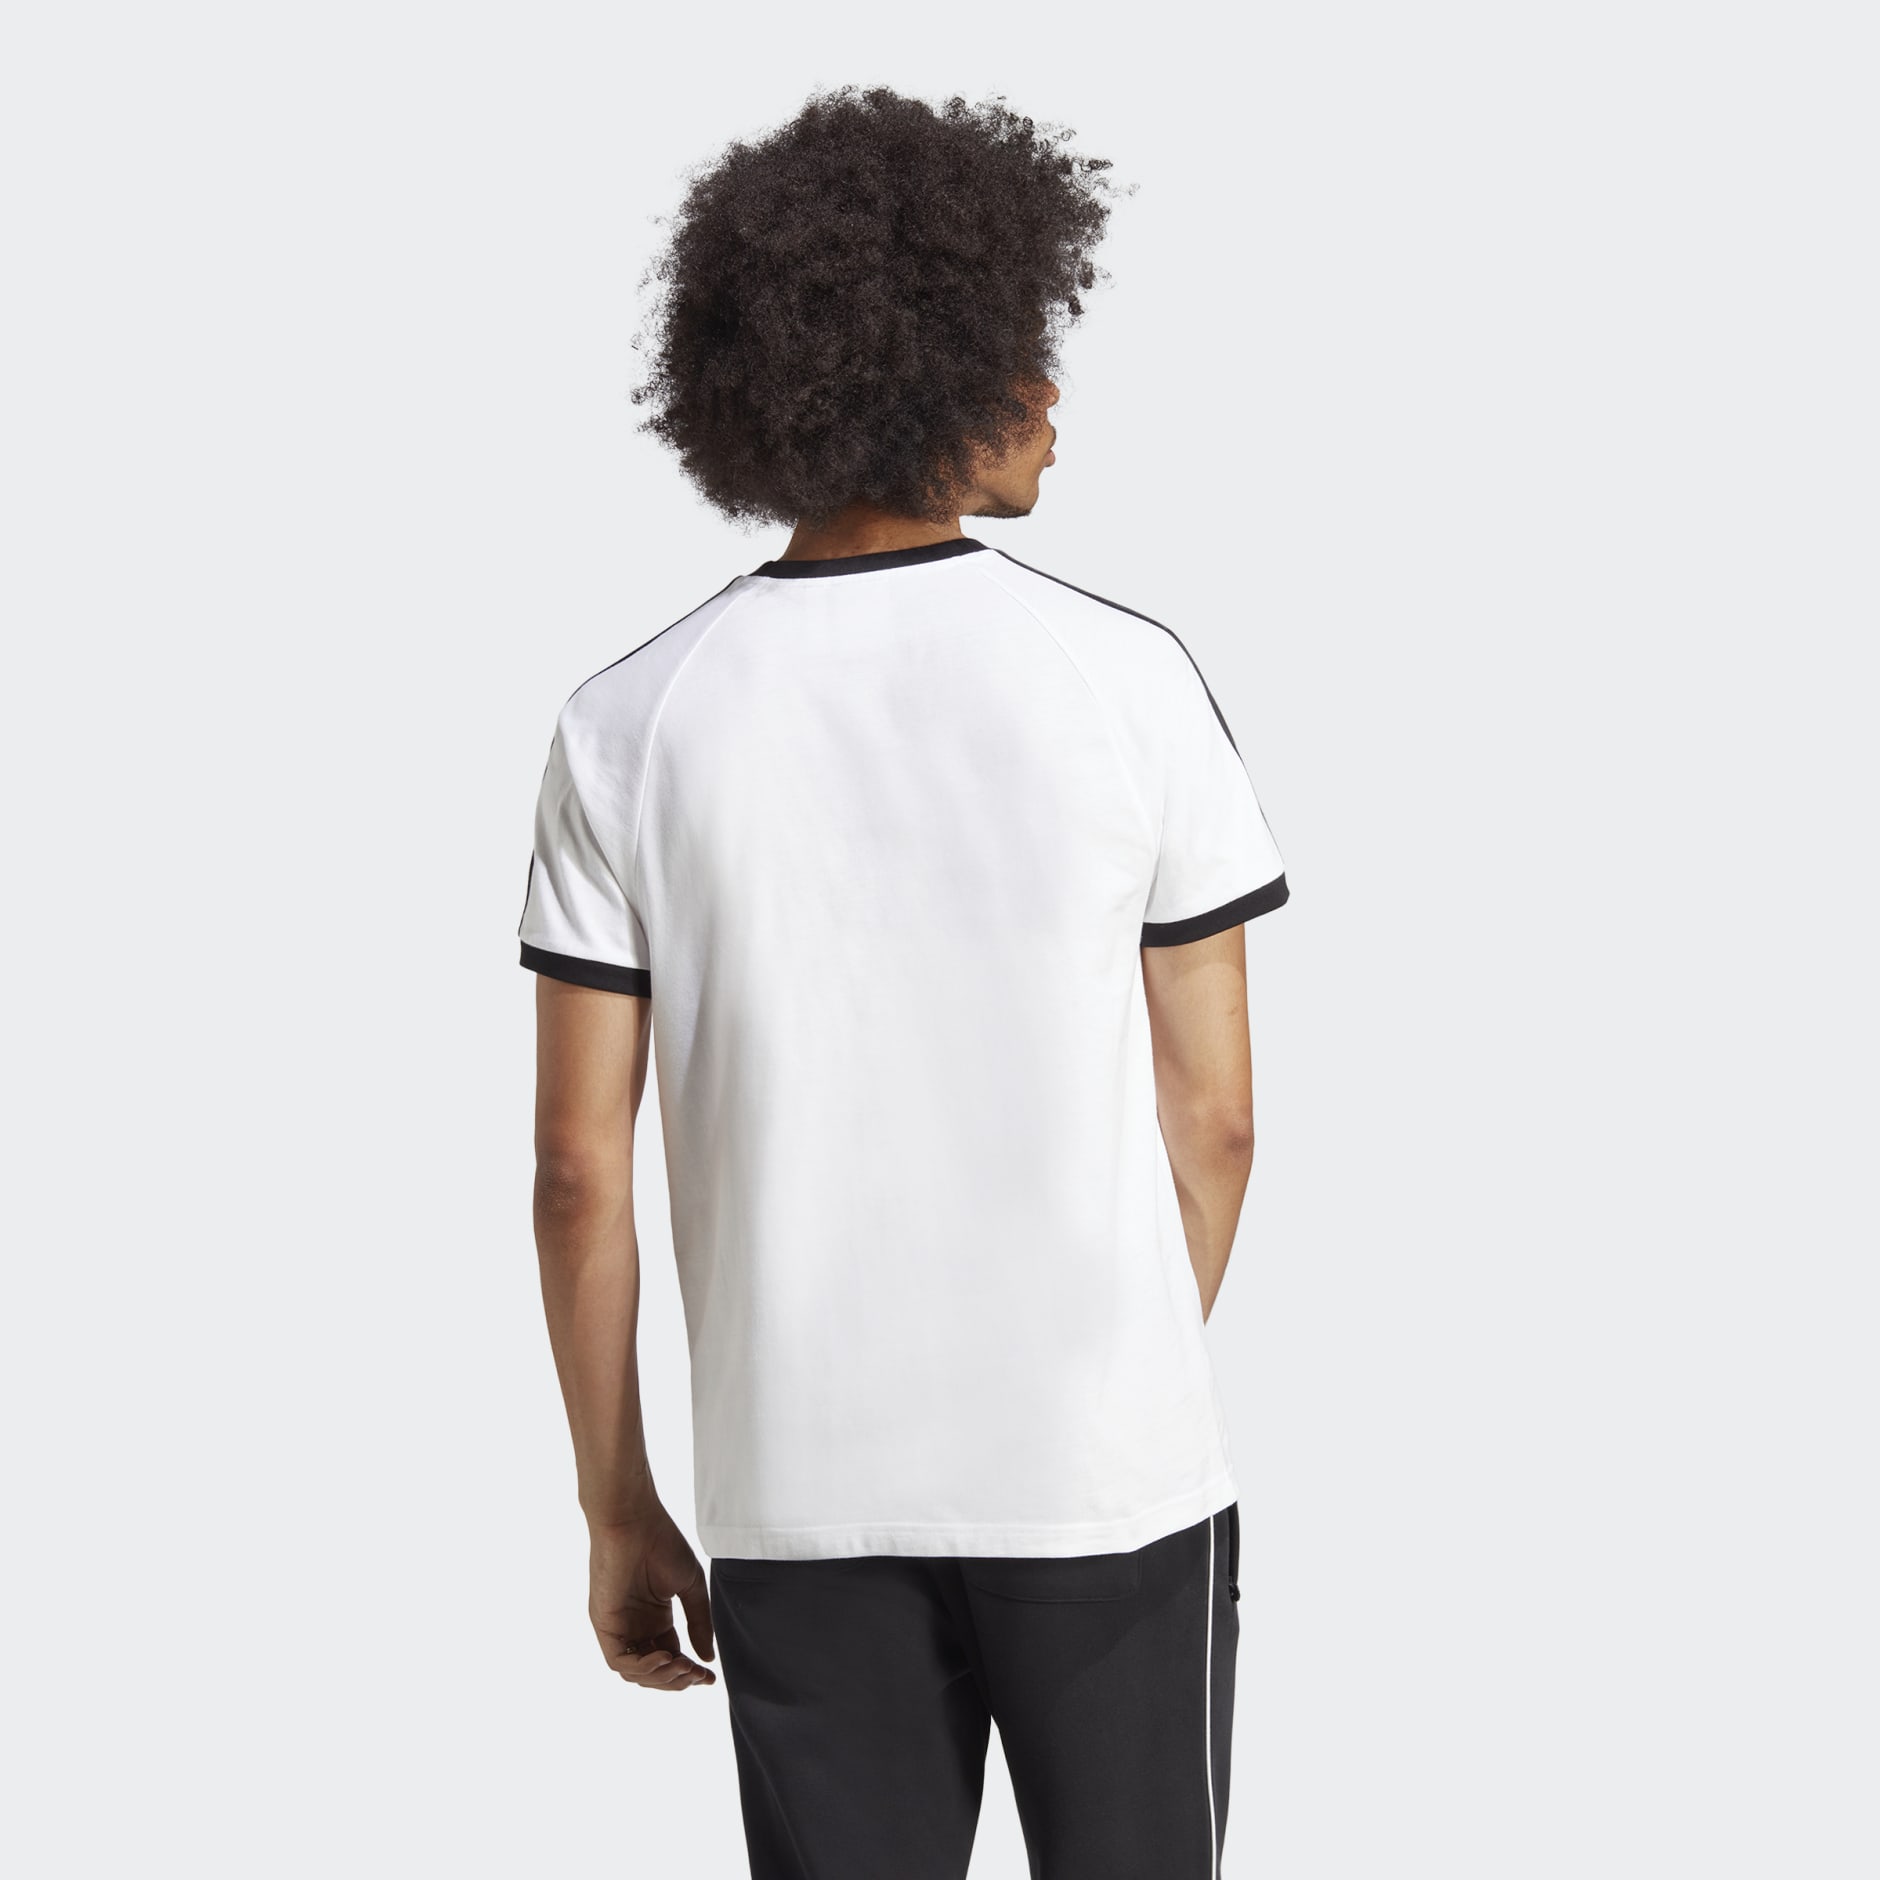 T-Shirt Homme Adidas Original Adicolor Classics 3-Stripes Tee